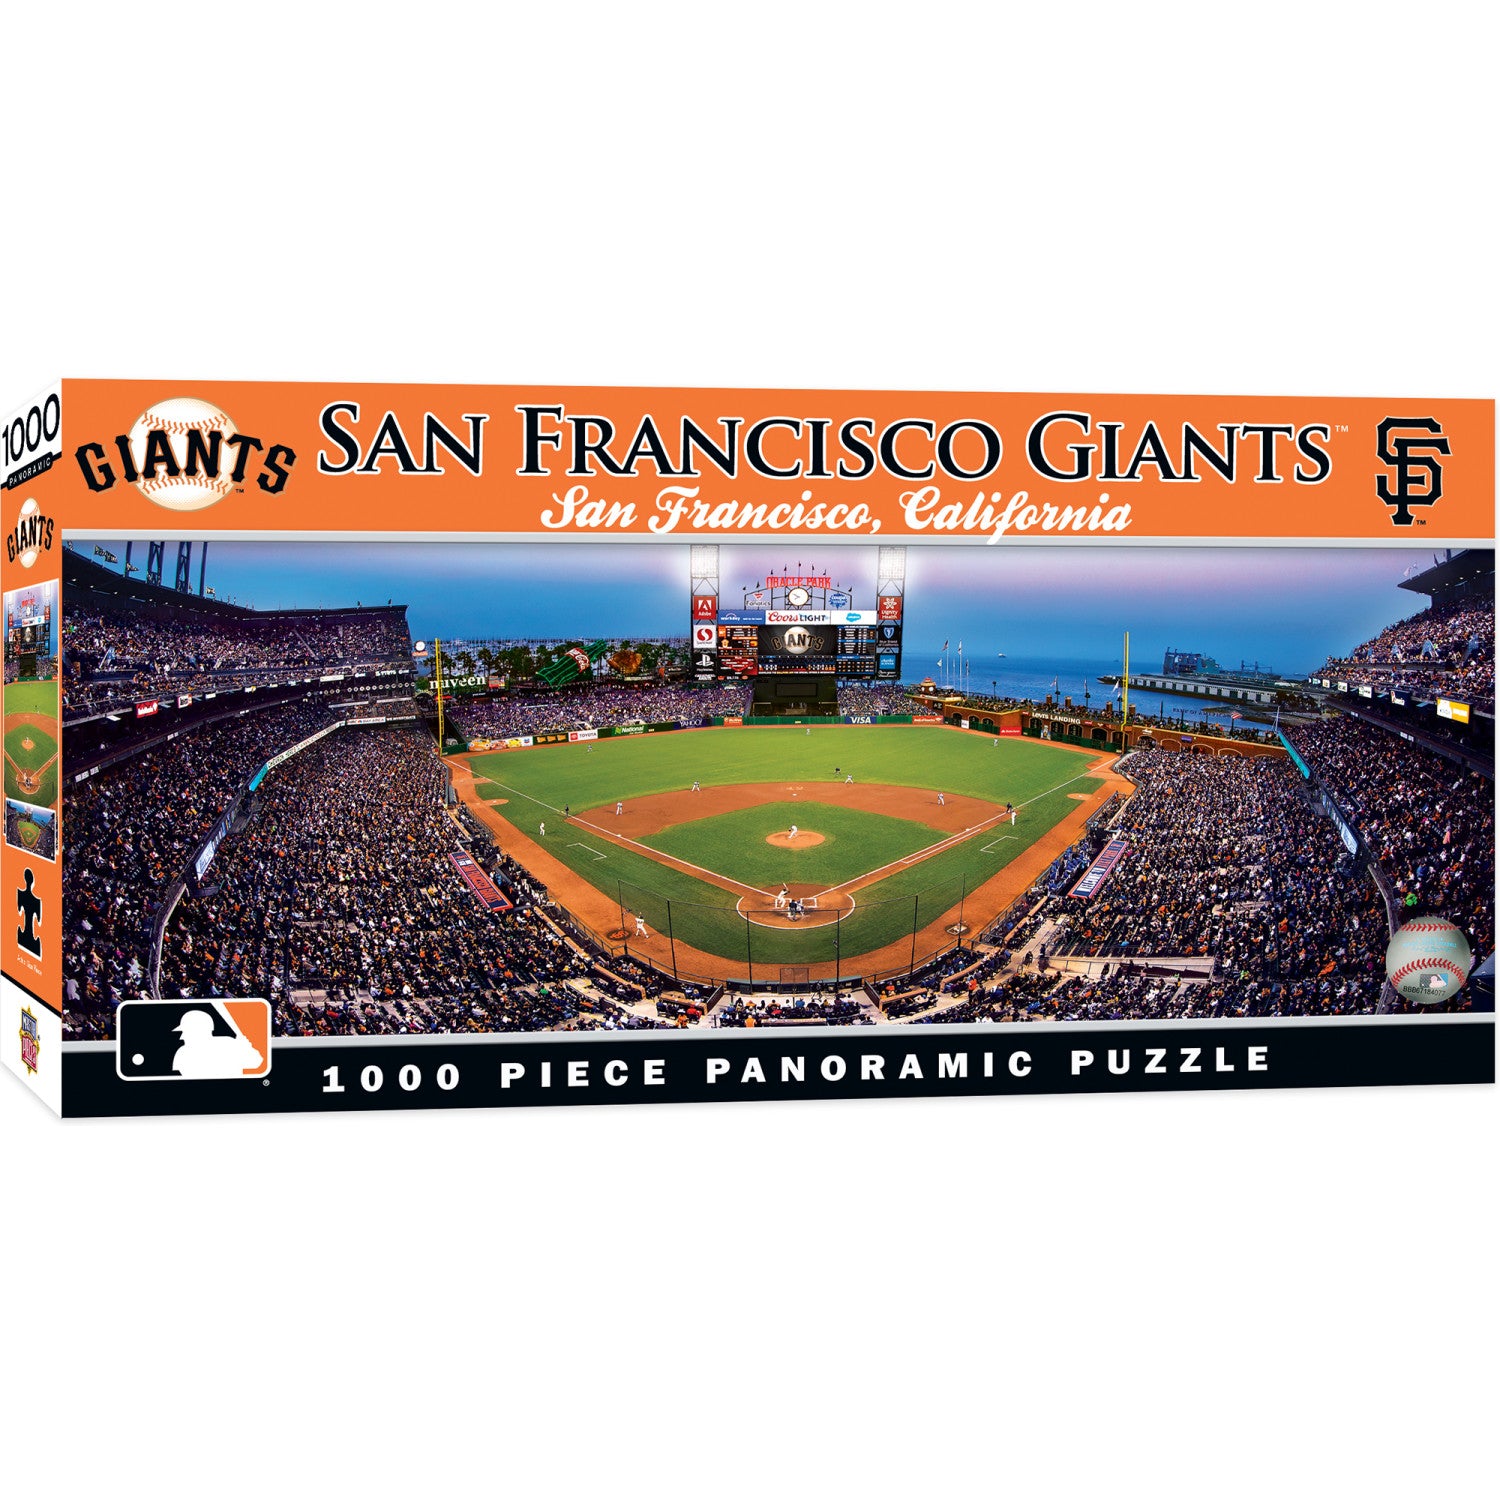 San Francisco Giants - 1000 Piece Panoramic Puzzle